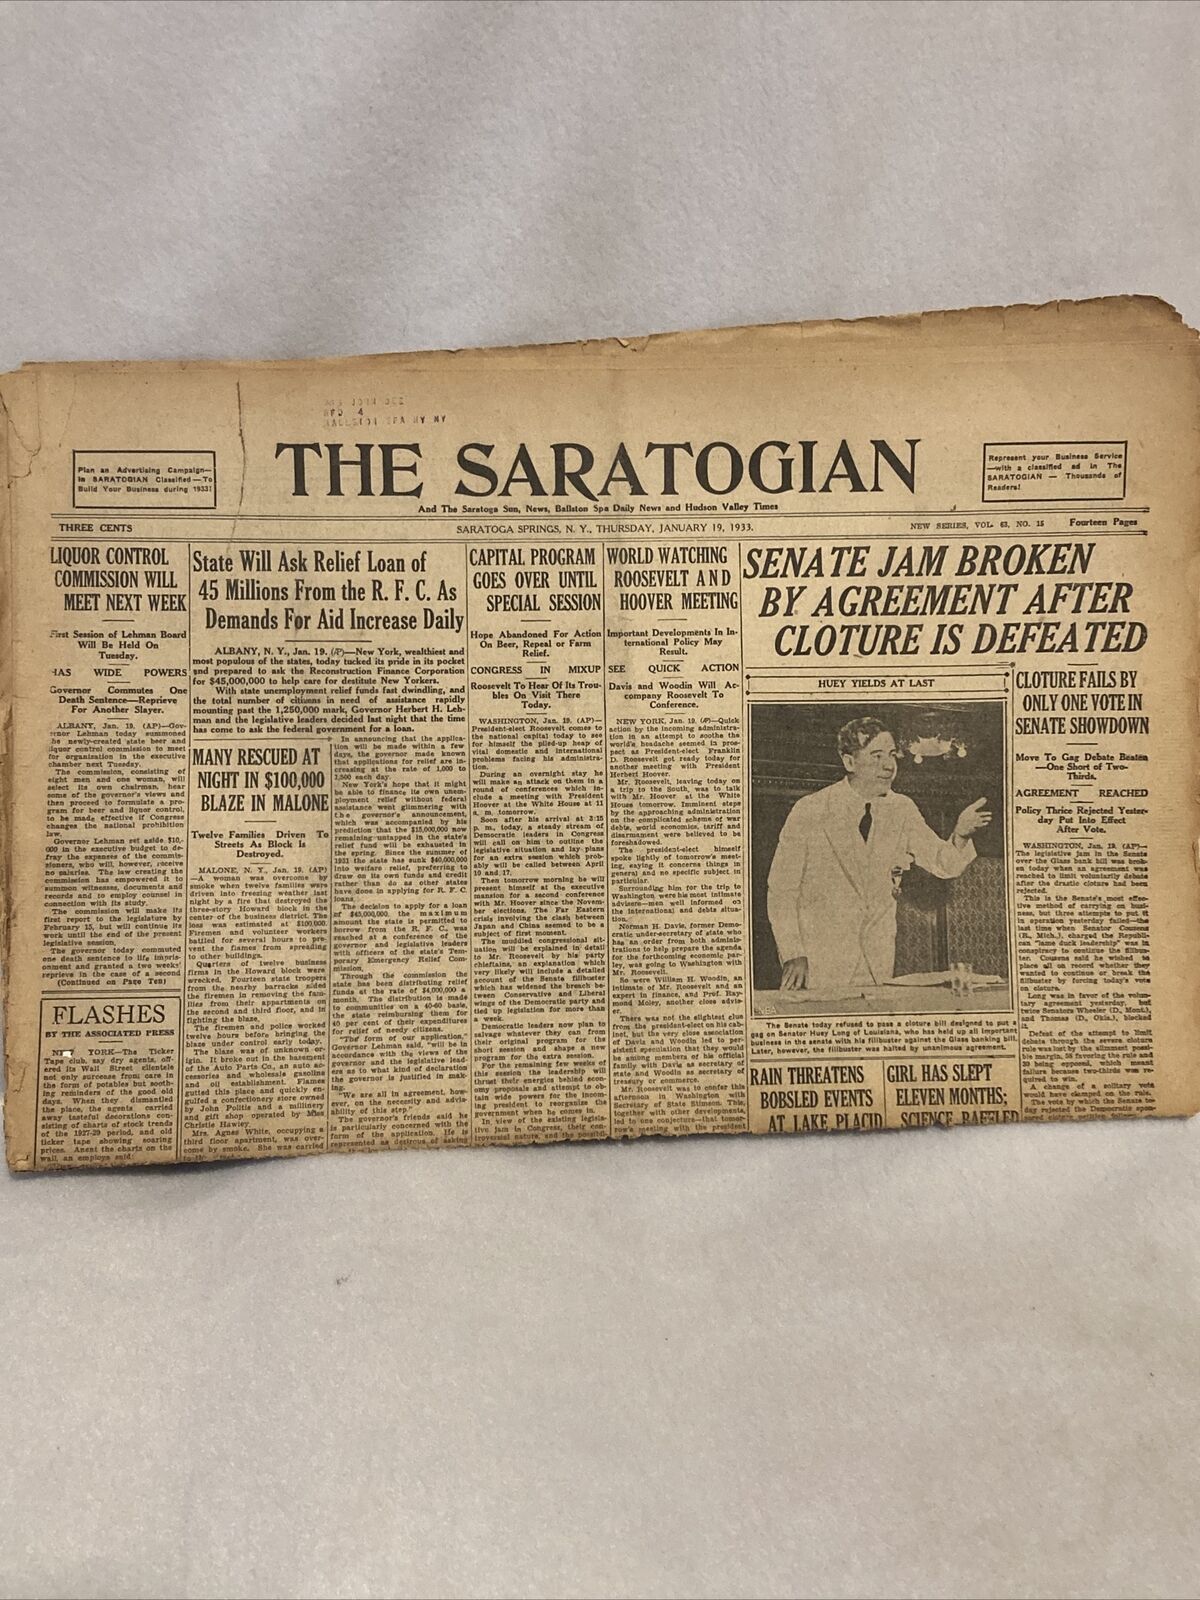 January 19. 1933 The Saratogian Newspaper *RARE*